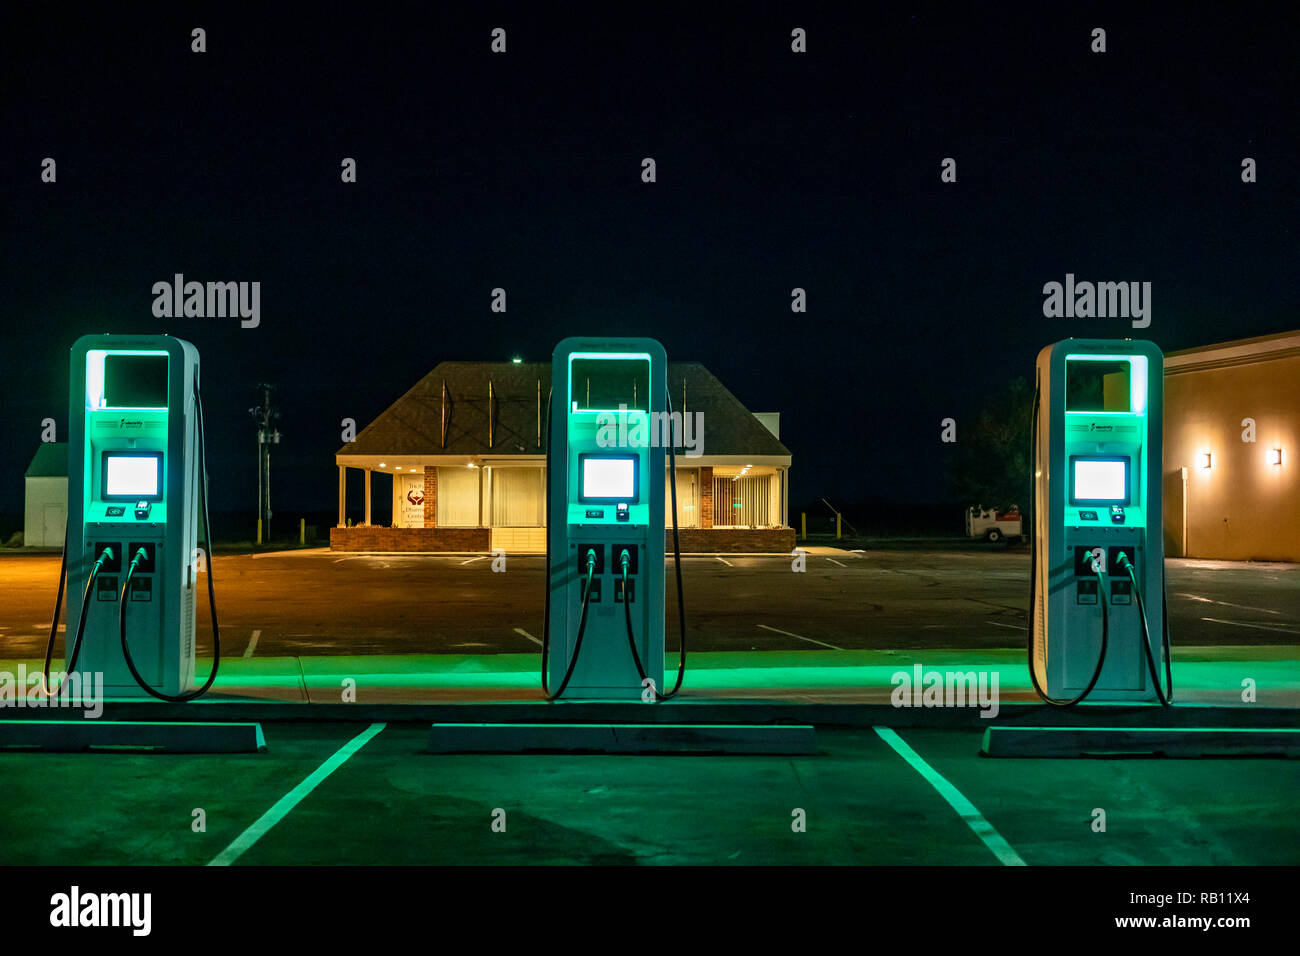 Grand Island, Nebraska - An electric vehicle charging station. Stock Photo